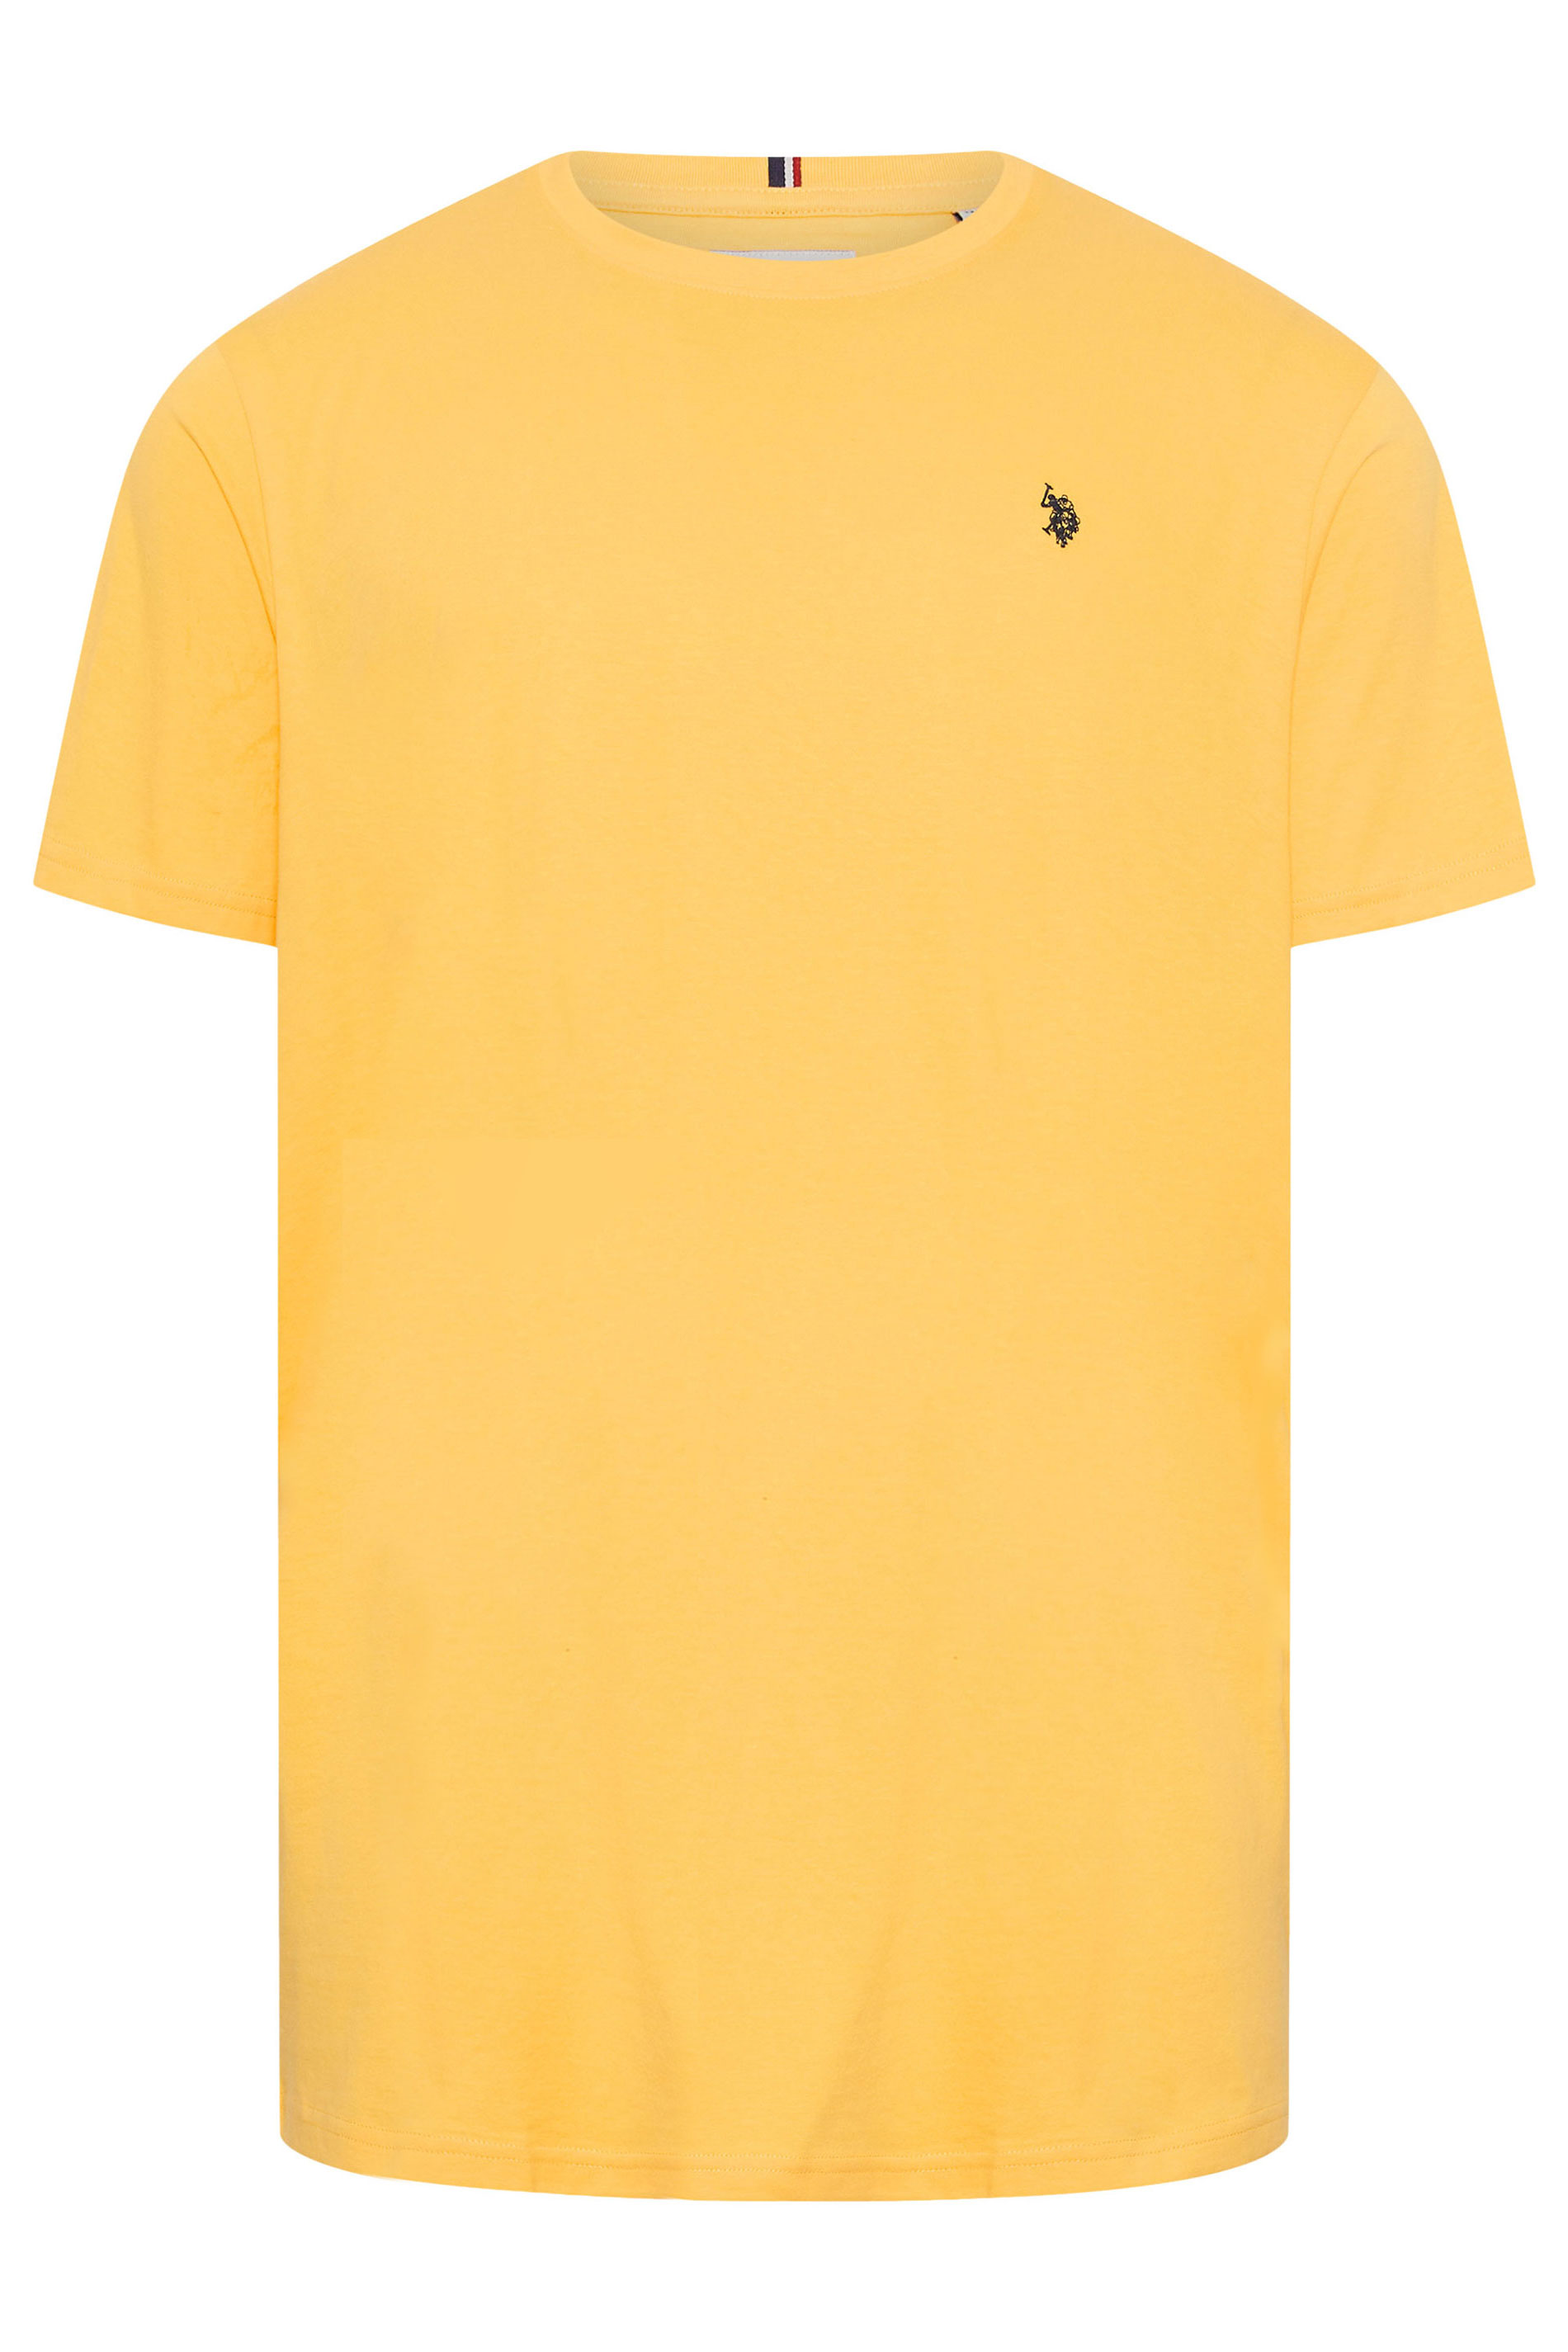 U.S. POLO ASSN. Big & Tall Yellow Short Sleeve T-Shirt | BadRhino 2